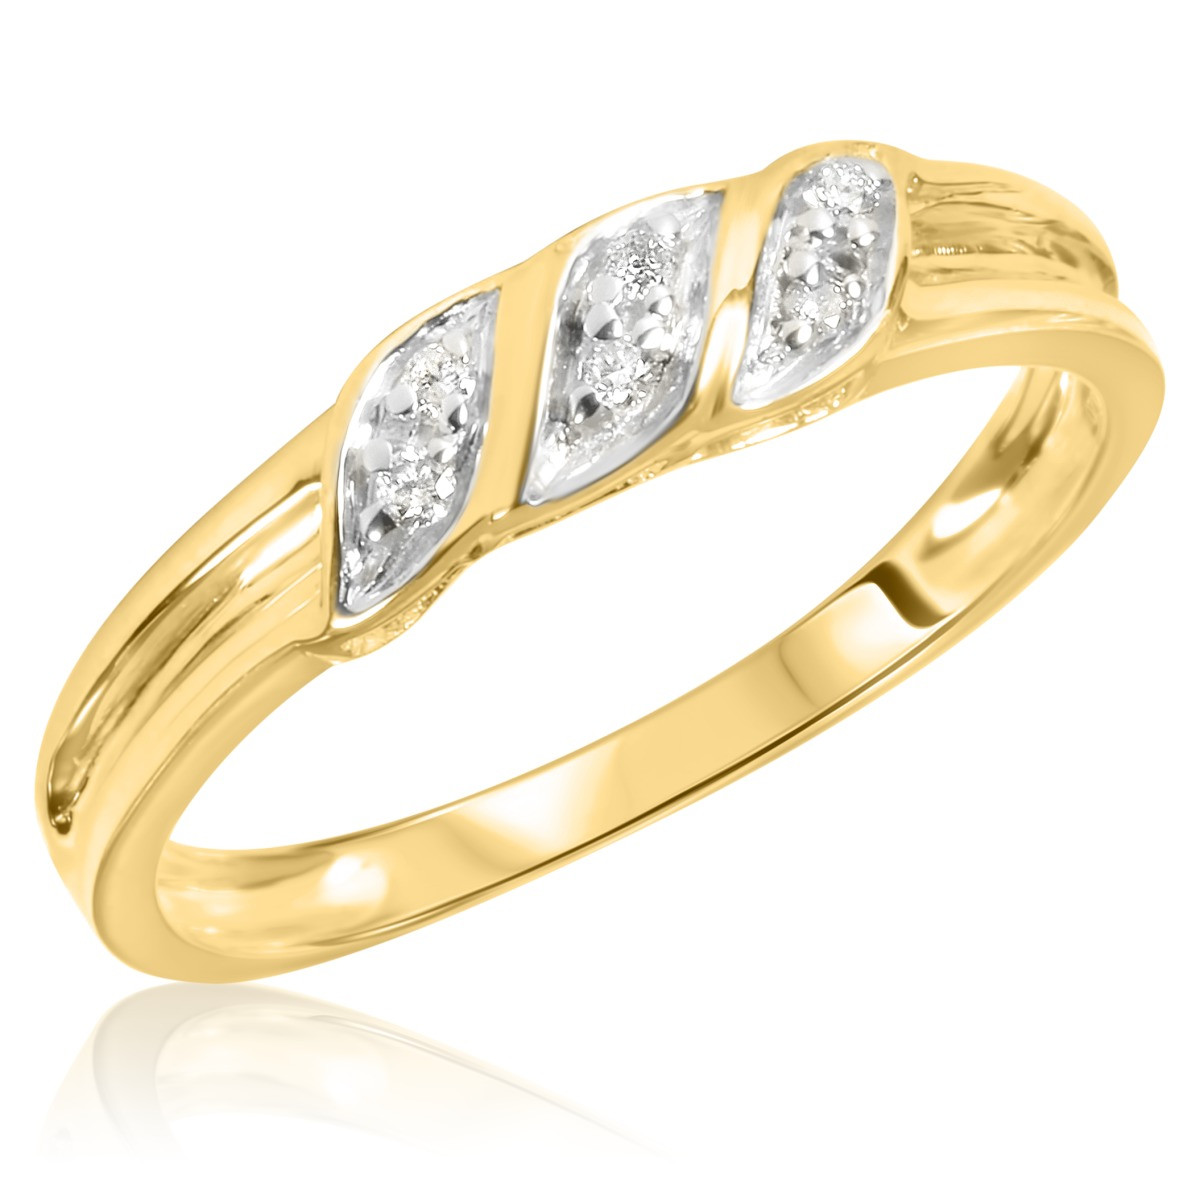 Wedding Rings Yellow Gold
 1 15 Carat T W Diamond Women s Wedding Ring 10K Yellow